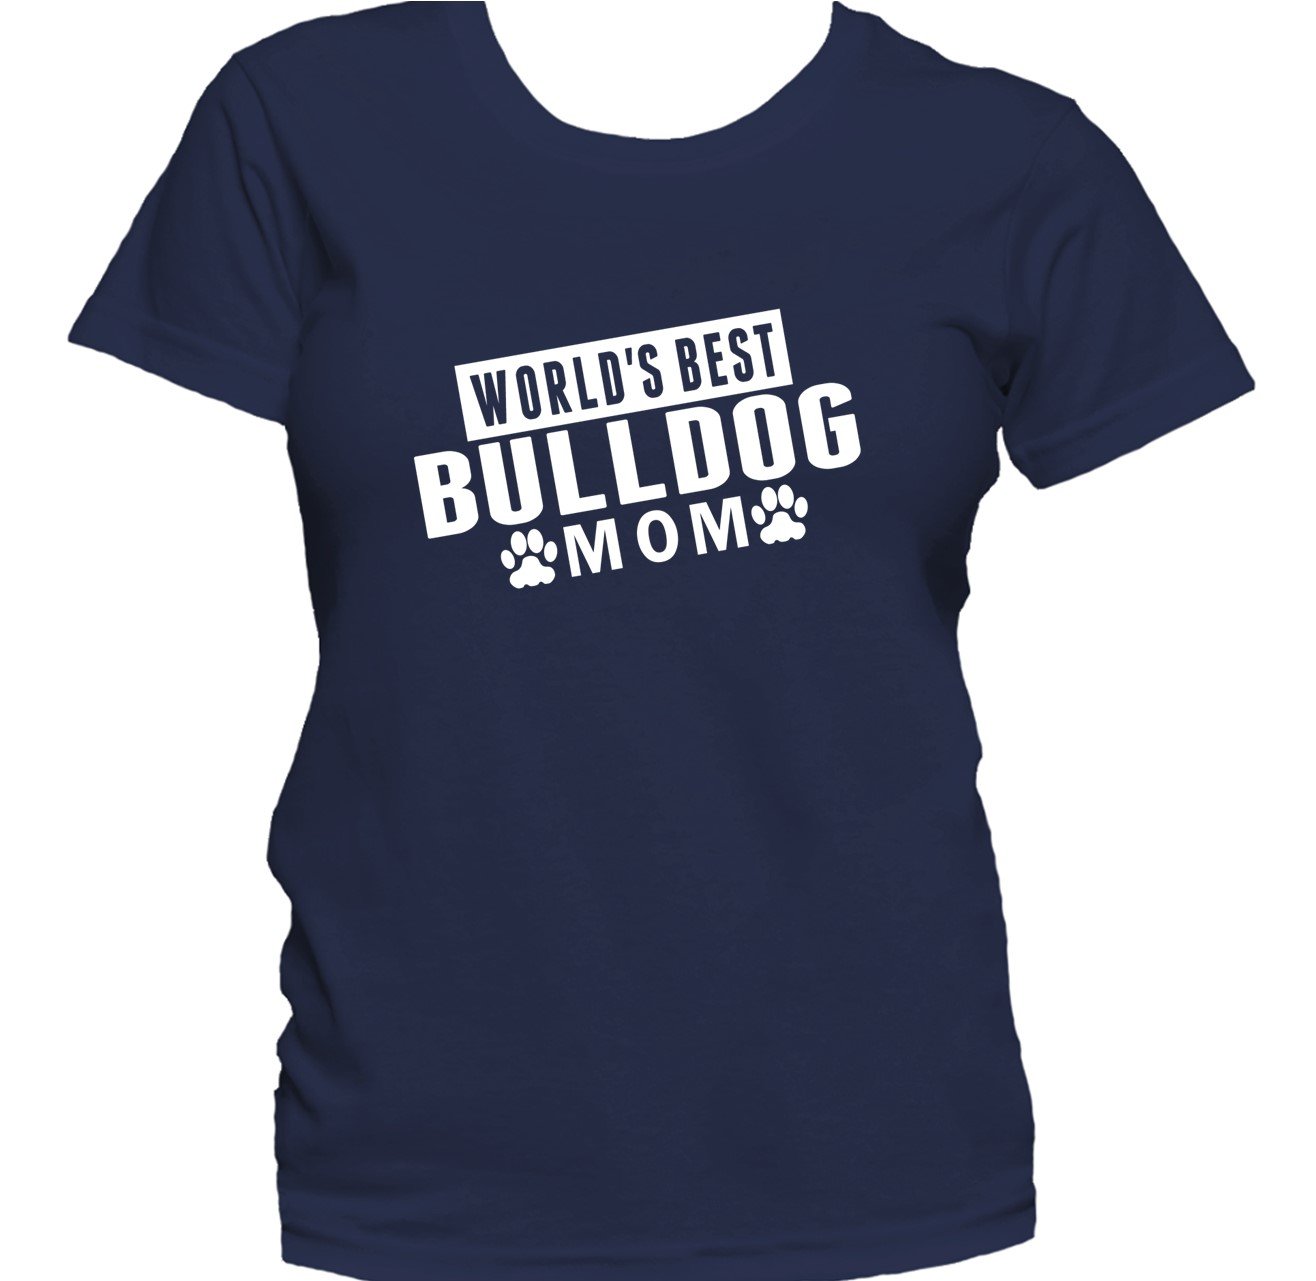 Bulldog Mom Shirt - World's Best Bulldog Mom Women's T-Shirt